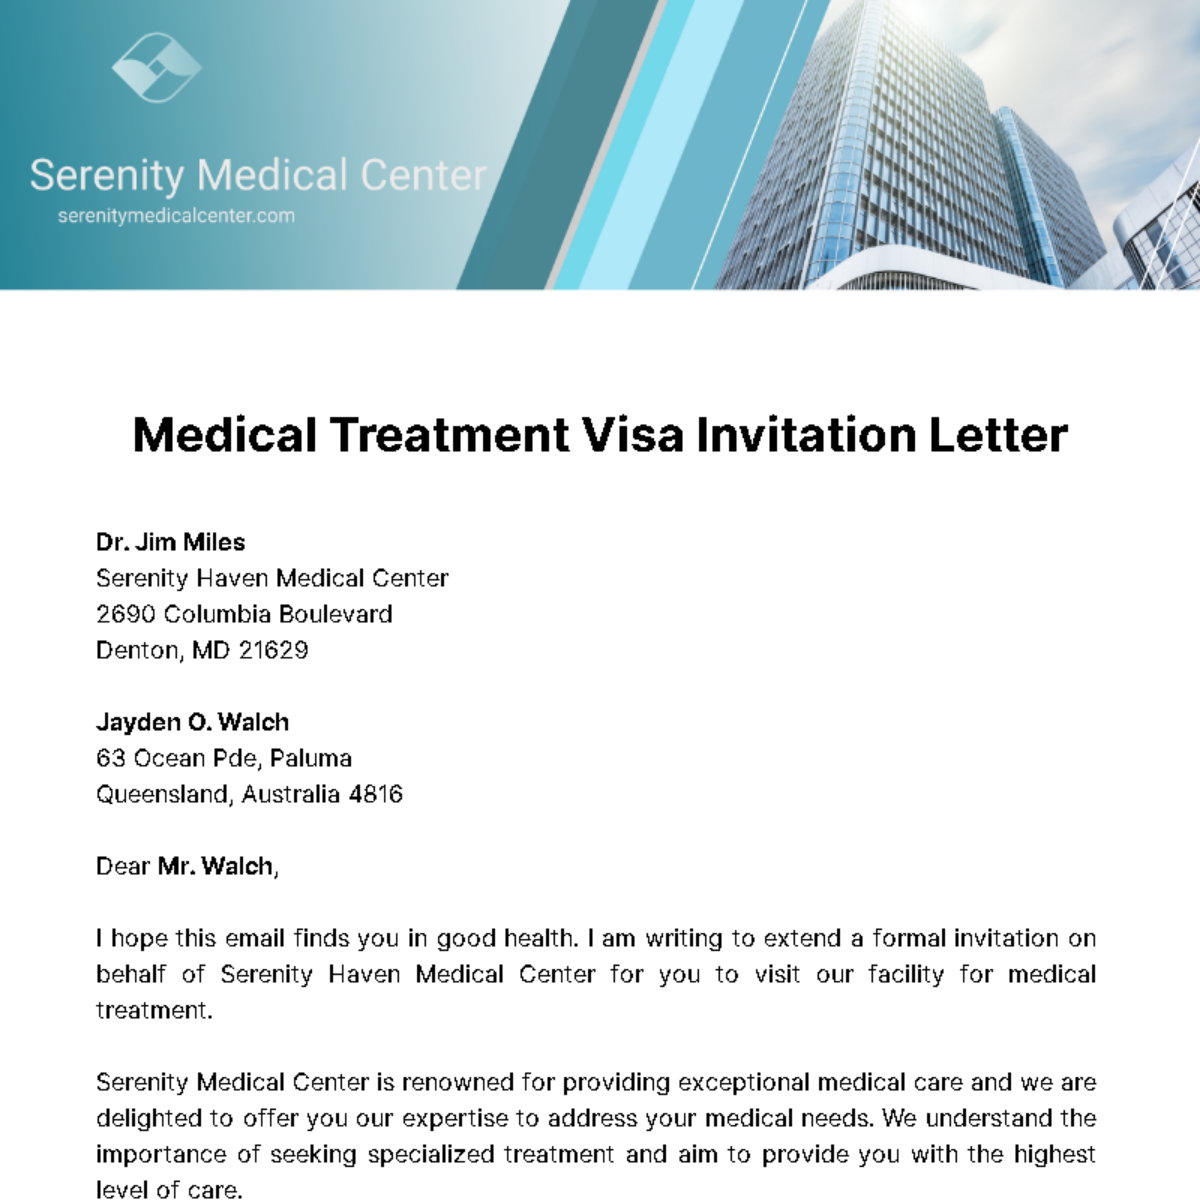 Medical Treatment Visa Invitation Letter Template